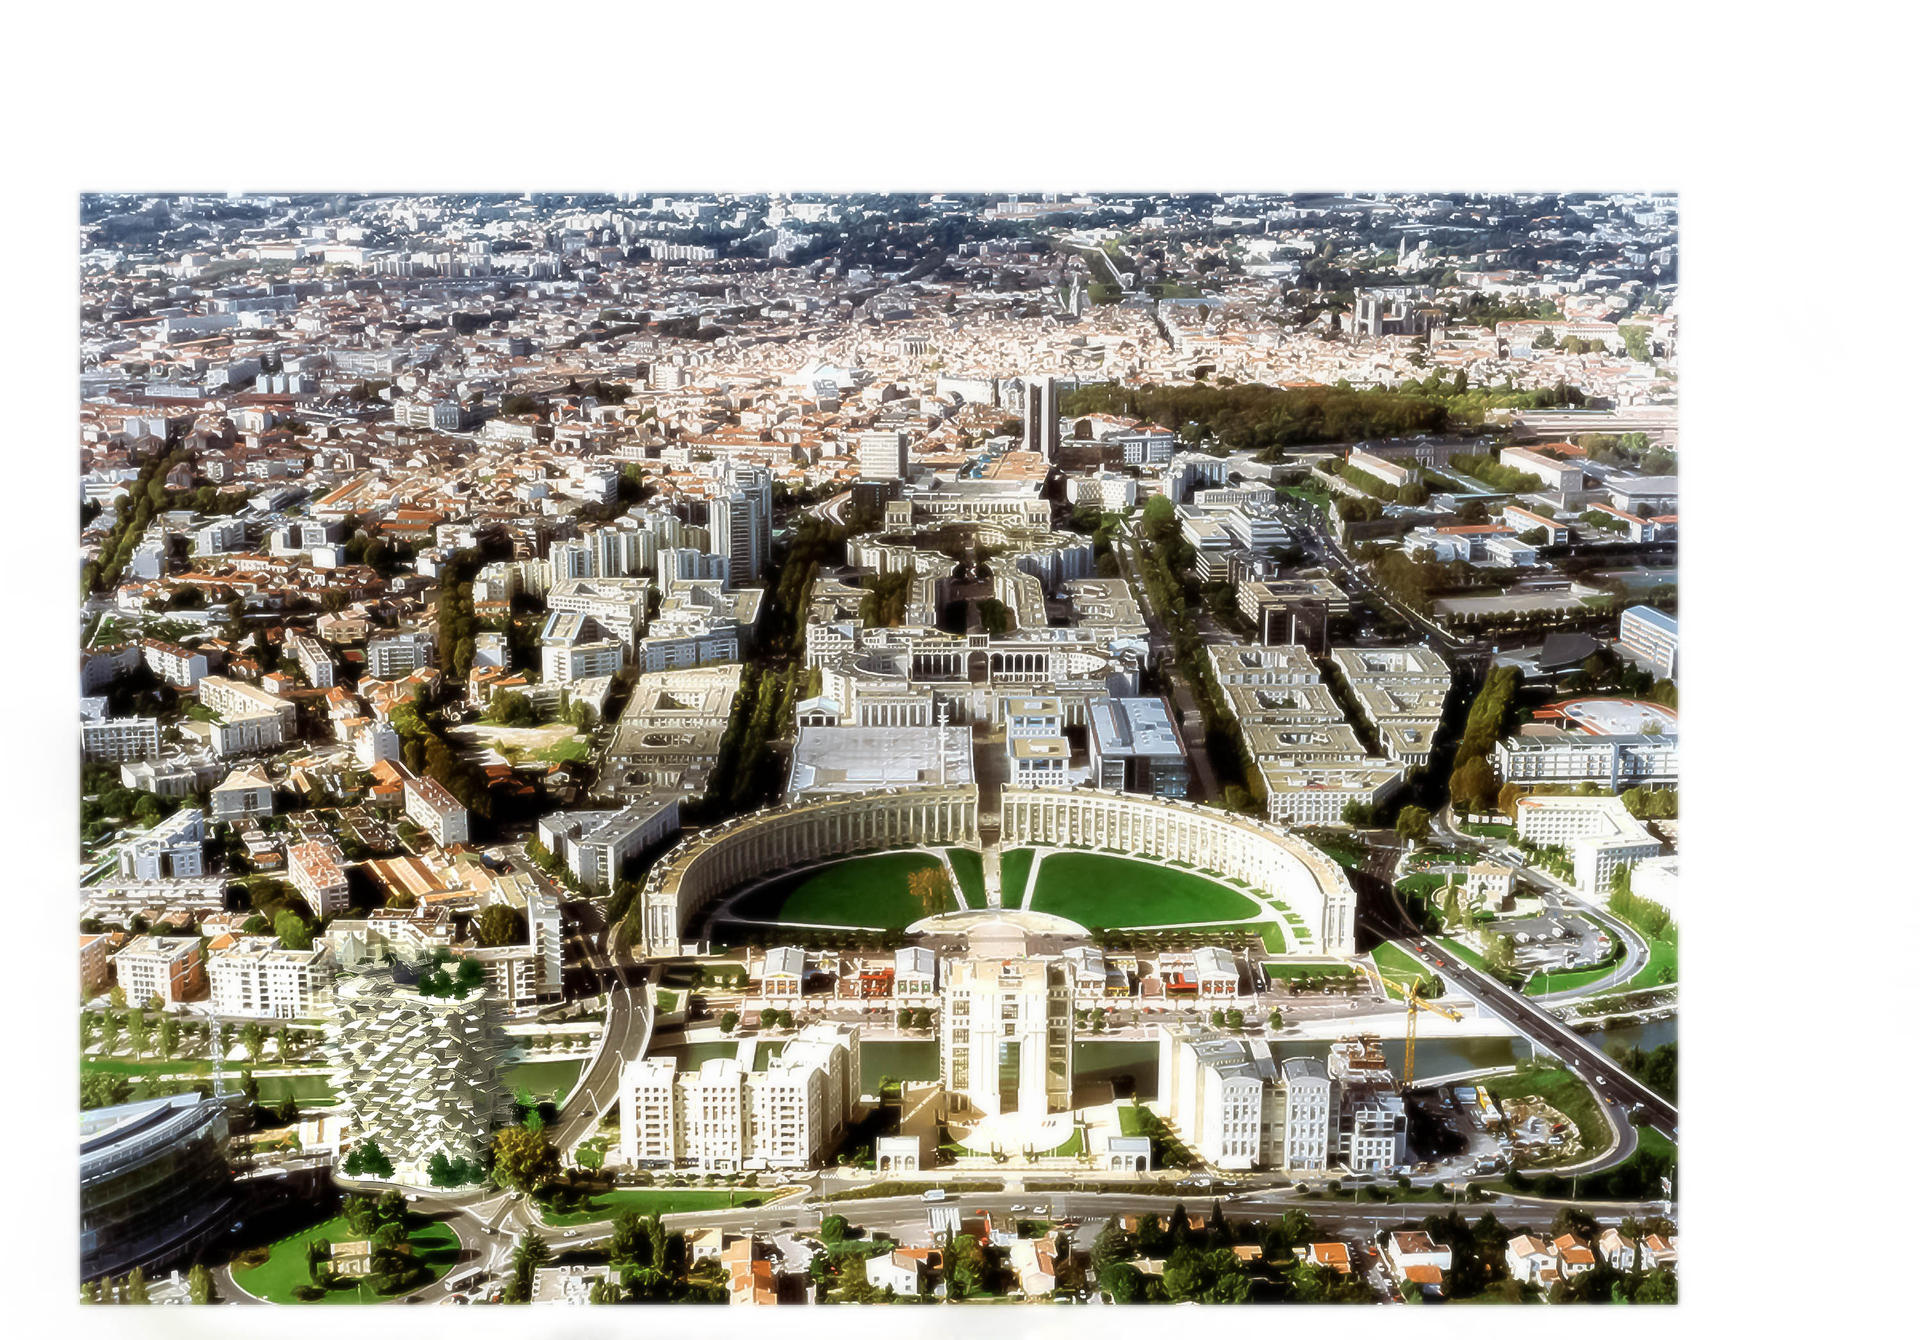 Richter 10 - Sou fujimoto architects / NL*A Paris / Oxo architects / RSI 